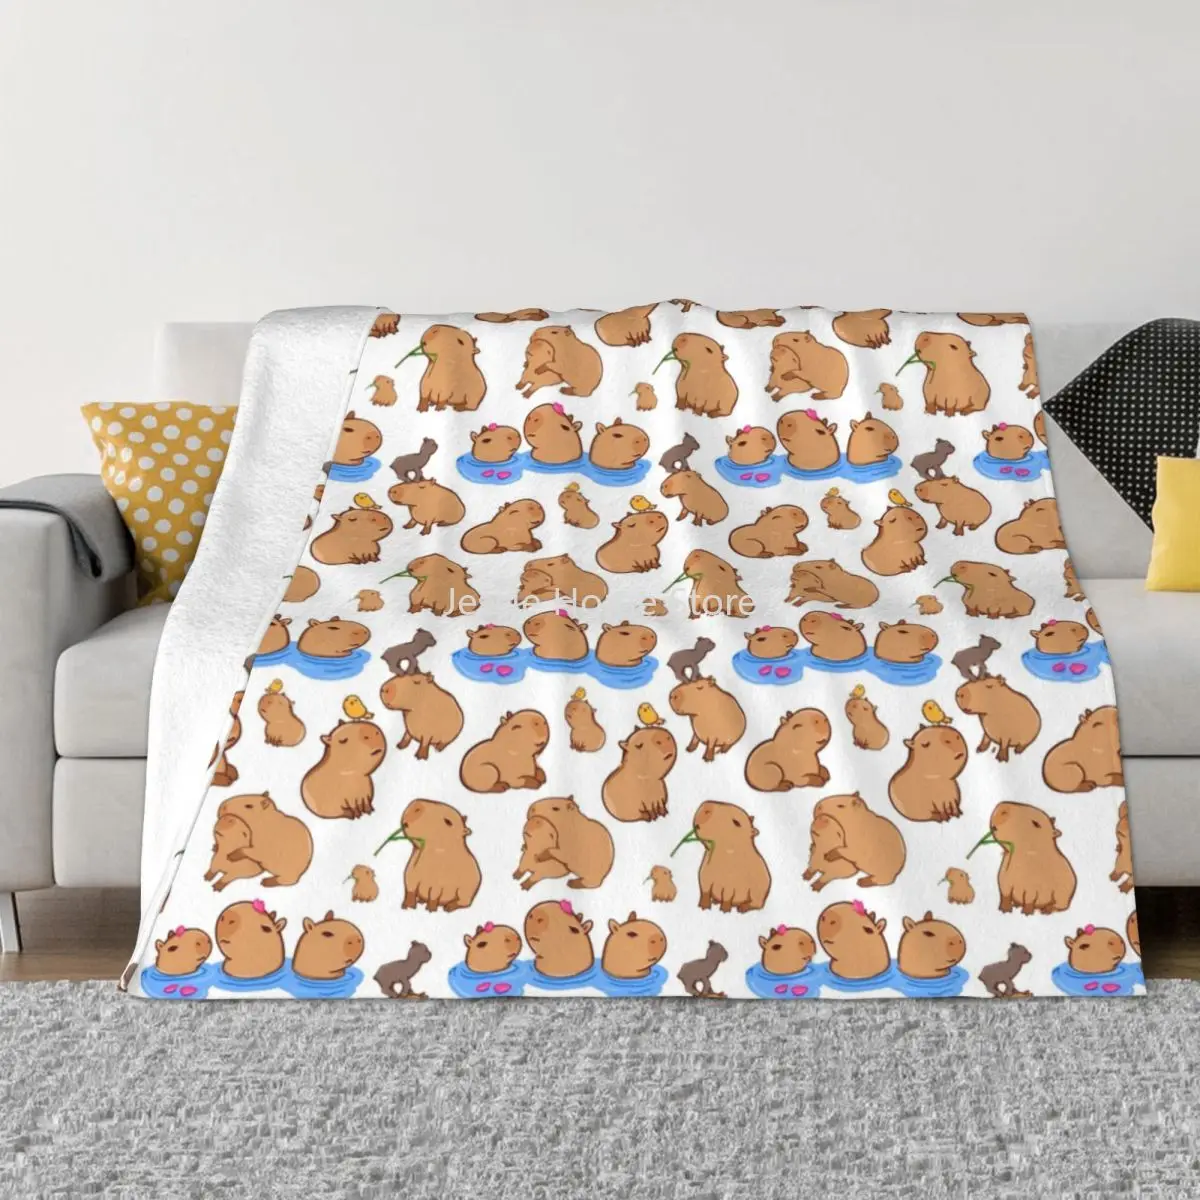 

Capybara Pattern Blanket Coral Fleece Plush Autumn/Winter Cute Animal Super Soft Throw Blanket for Home Outdoor Bedspreads